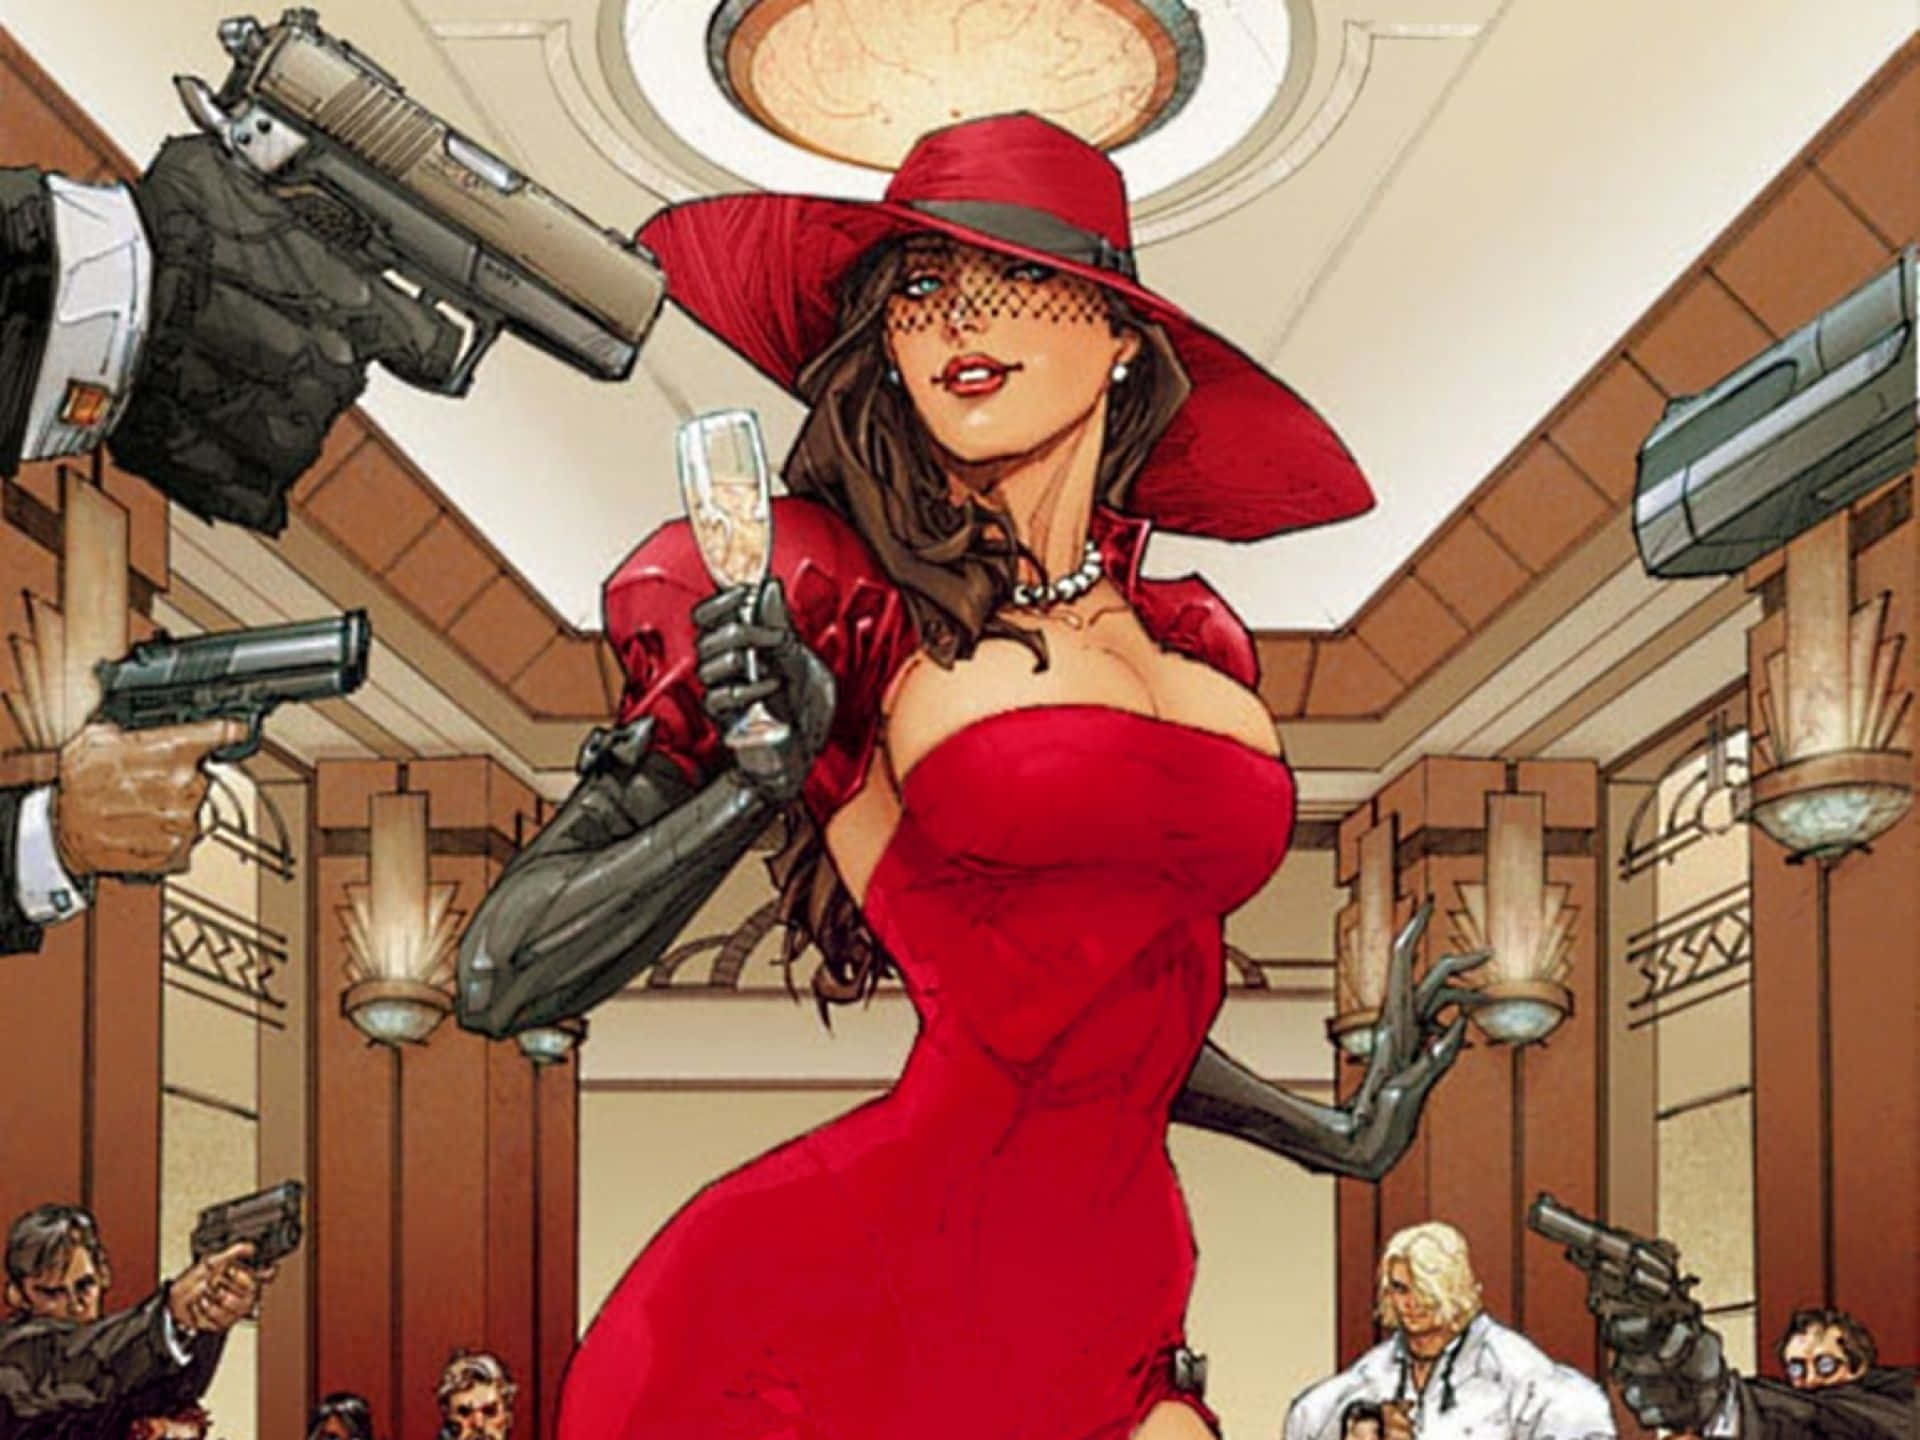 "Carmen Sandiego on the Hunt for her Next Mark" Wallpaper